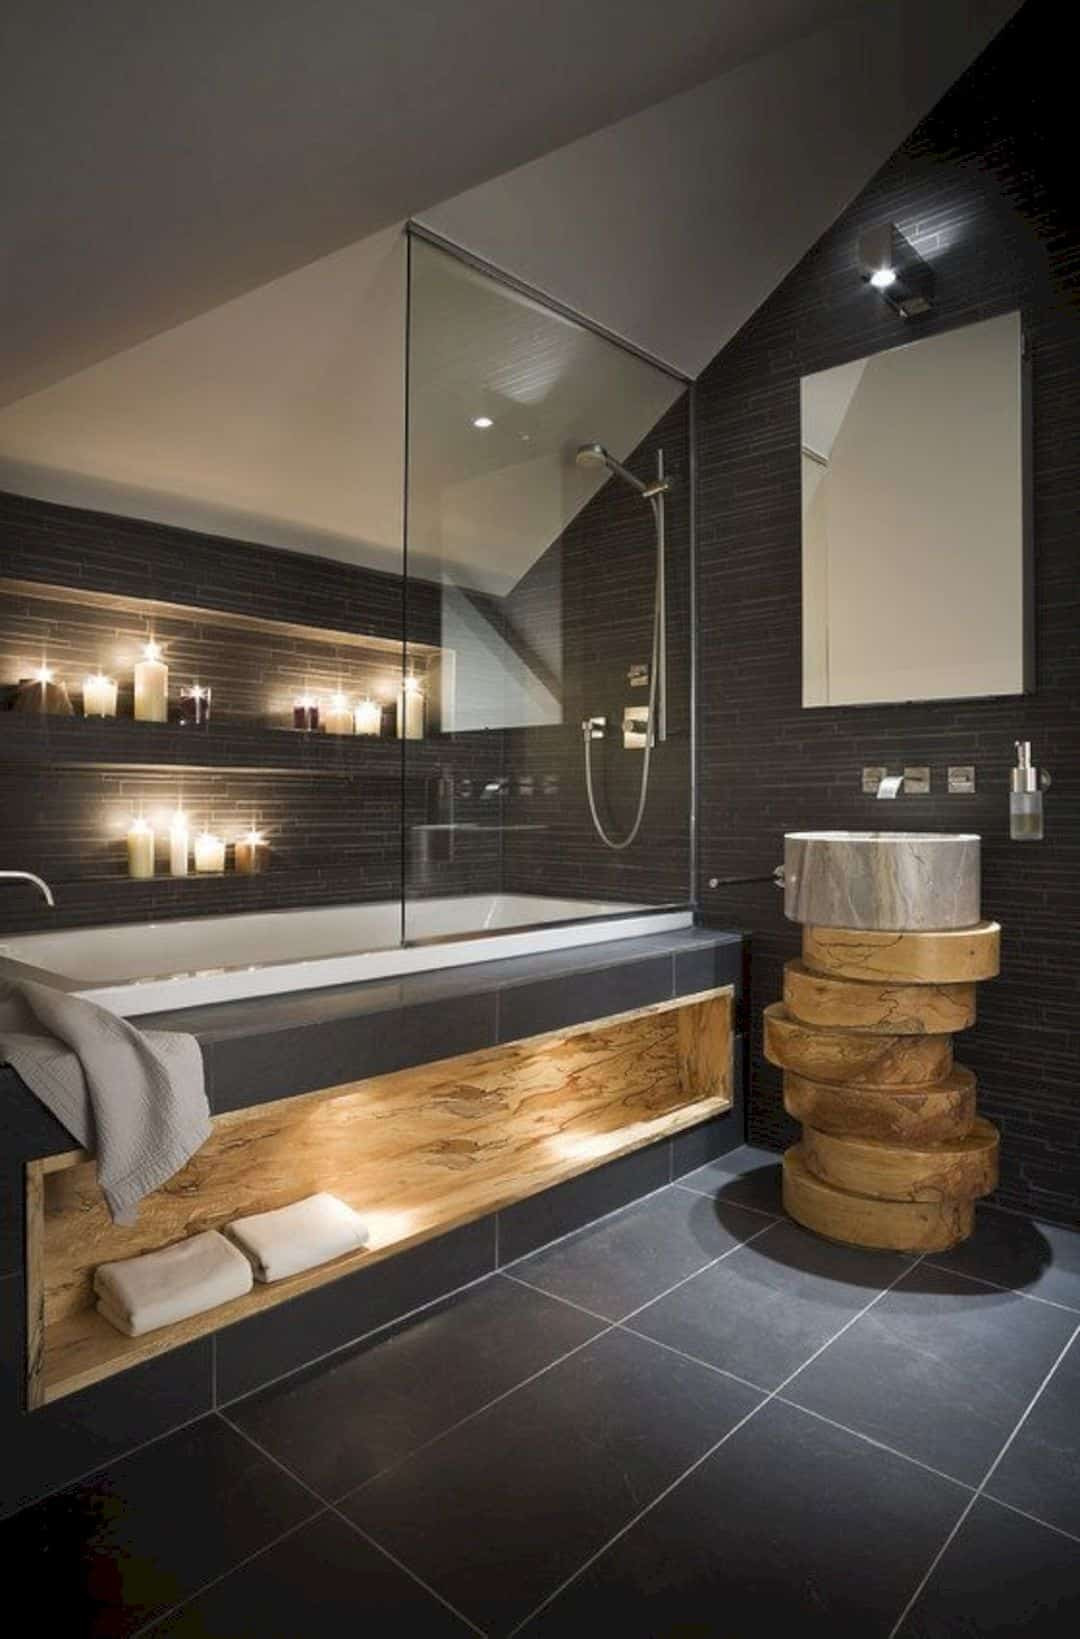 Cool Bathroom Designs
 15 Amazing Design Ideas For a Unique Bathroom